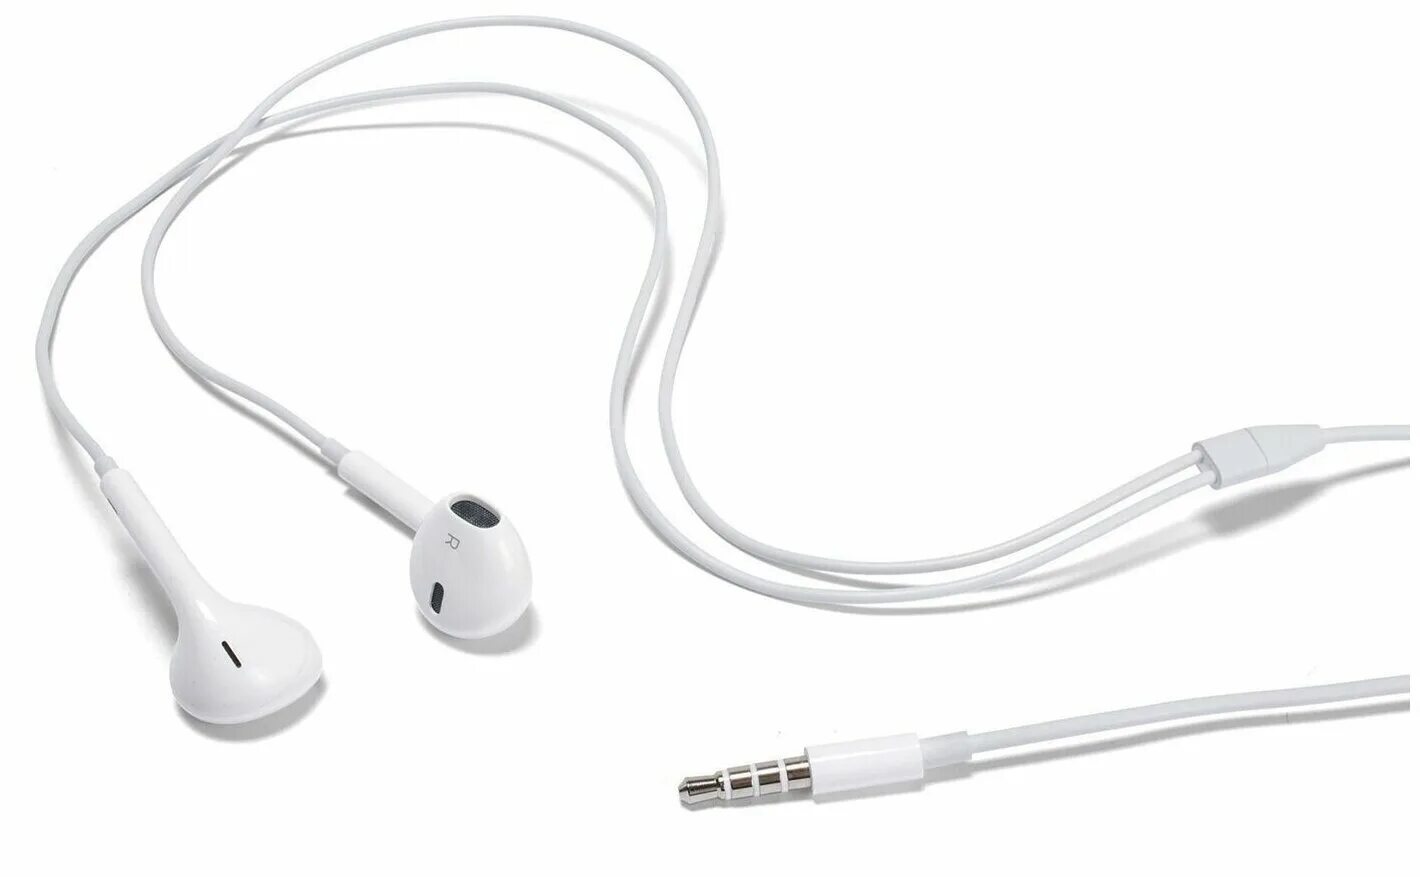 Ляшки наушники. Наушники Apple Earpods (3.5 мм), белый. Наушники Apple Earpods с разъёмом 3.5. Md827fe/a наушники для Apple Earpods. Наушники с микрофоном Apple Earpods Headphone Plug (mnhf2zm/a).